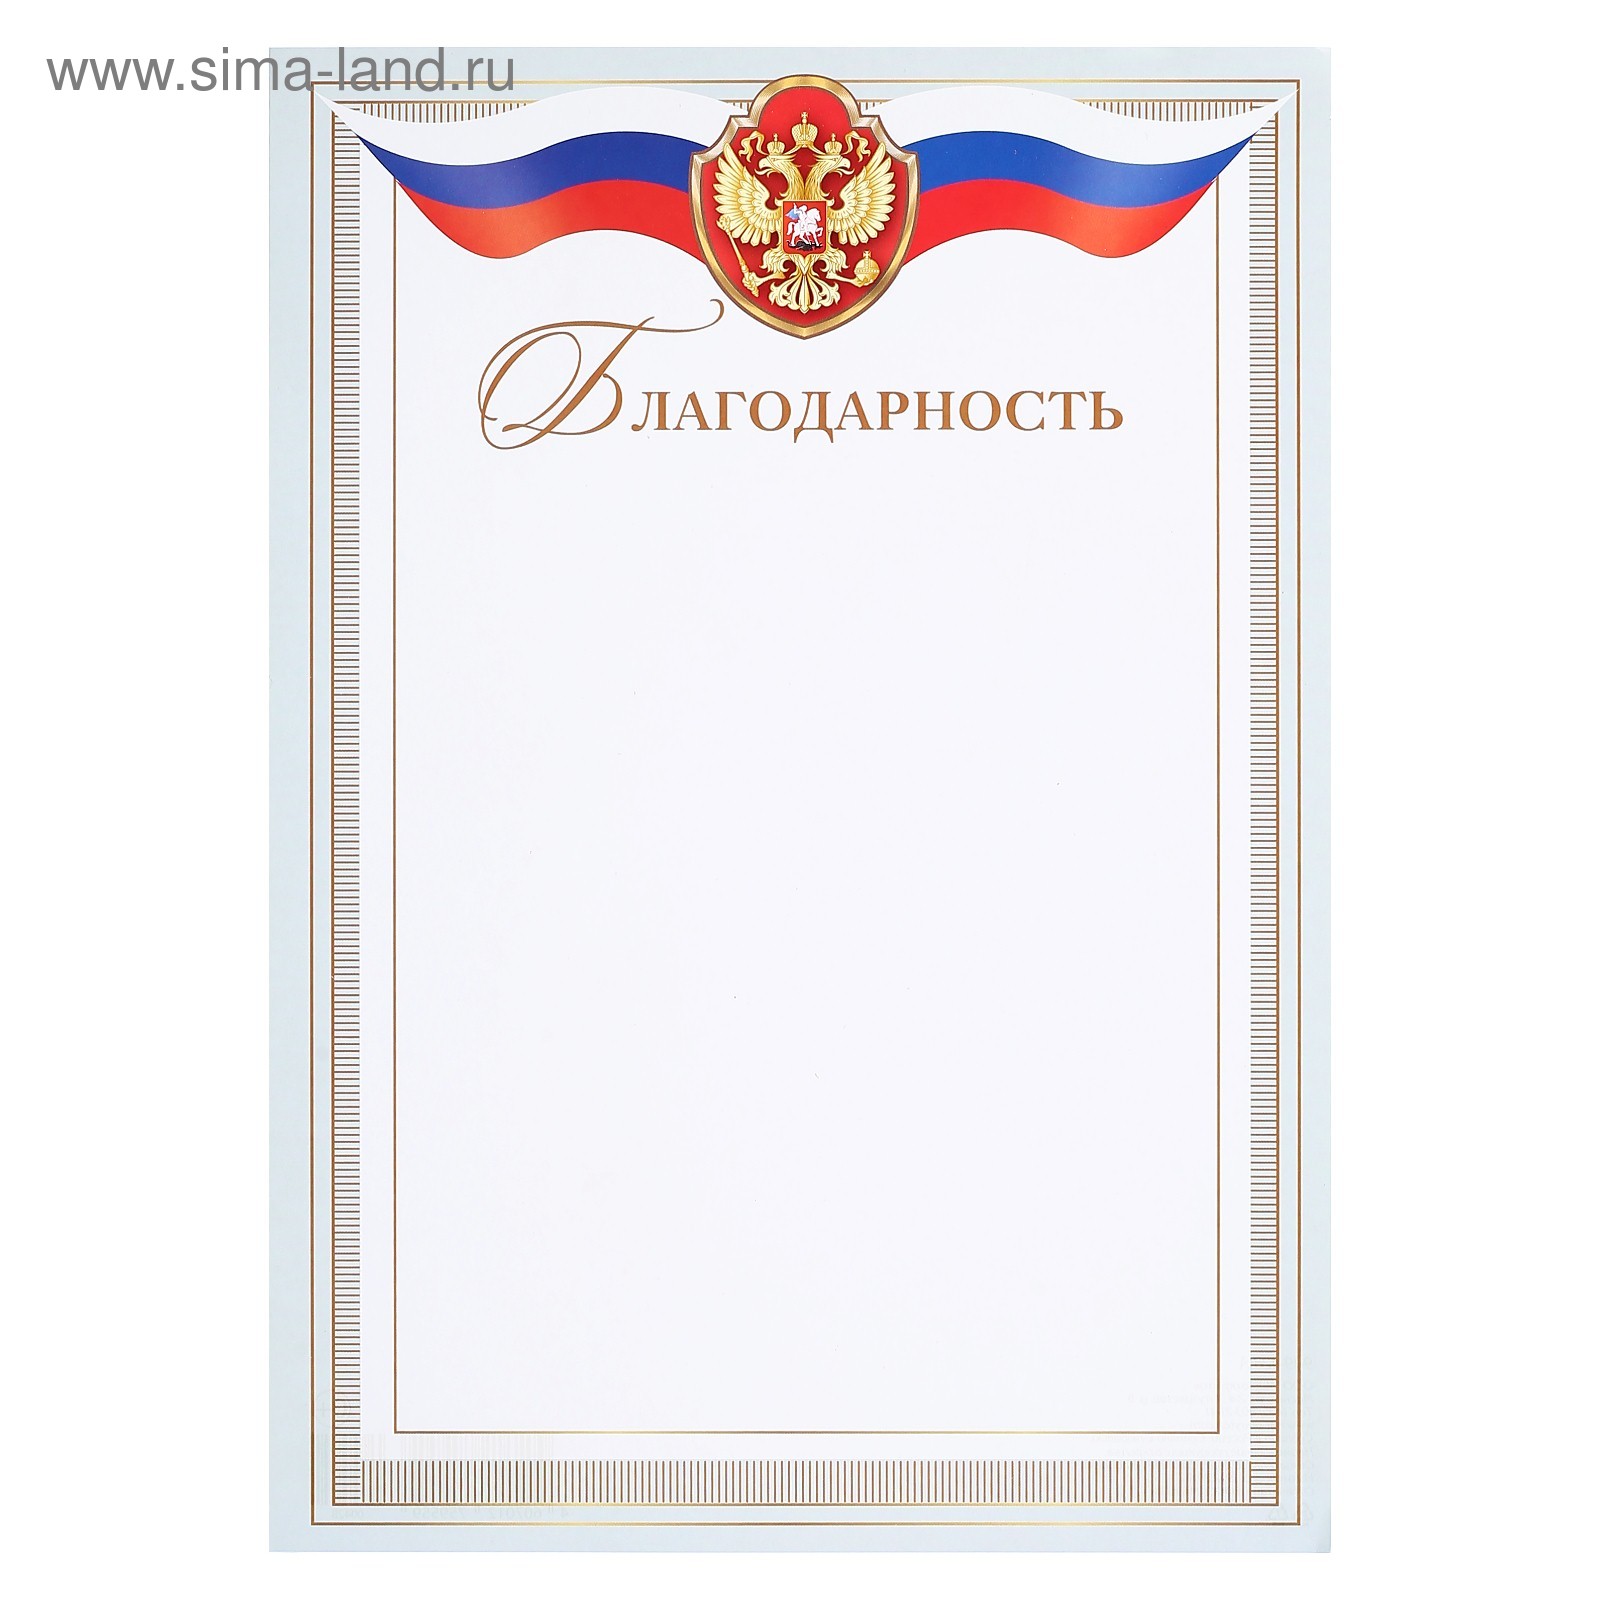 Шаблоны благодарности с флагом России